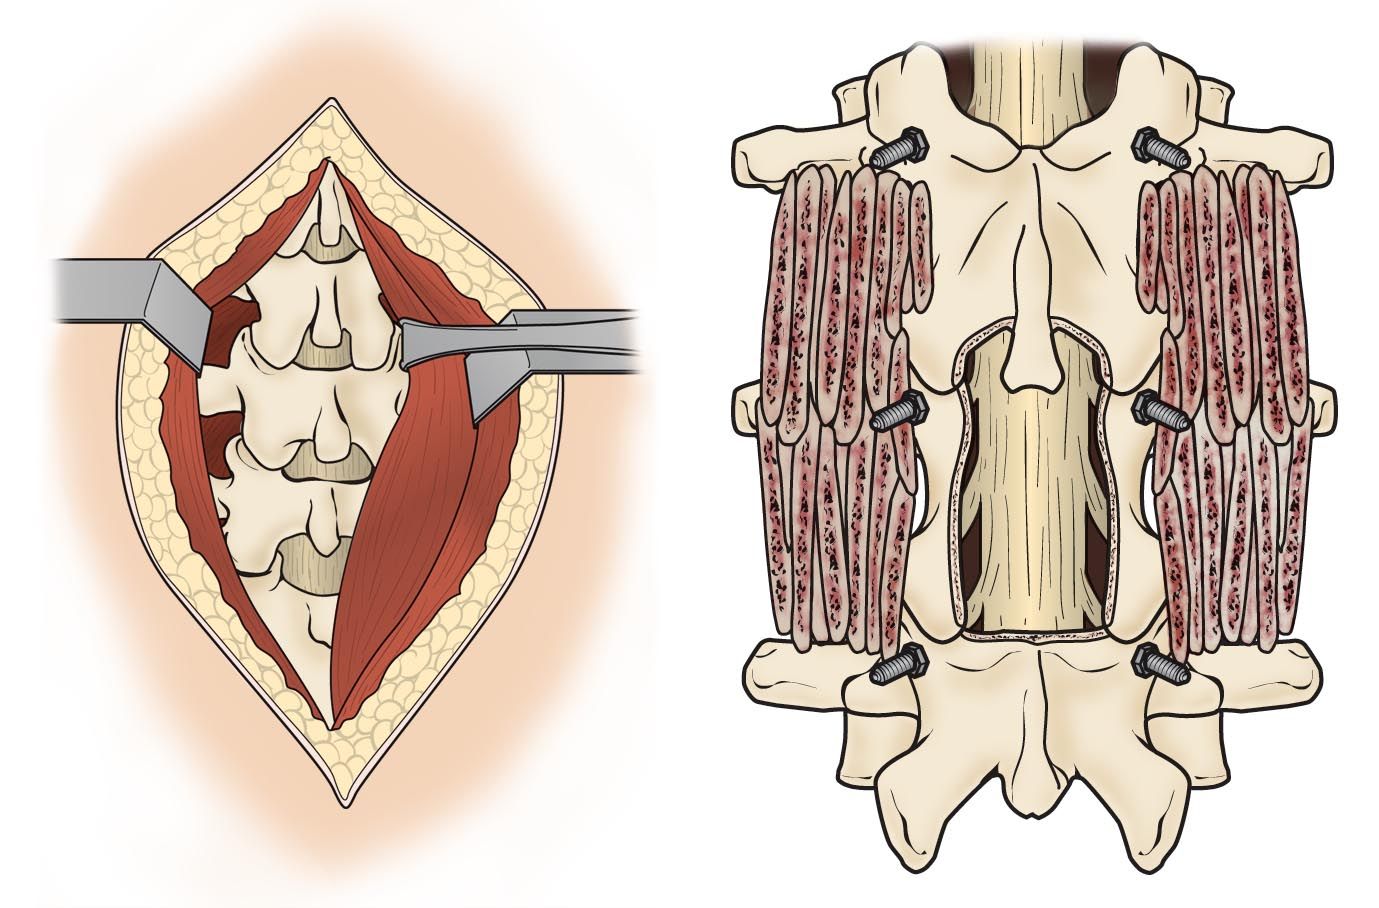 Spine decompression and bone graft